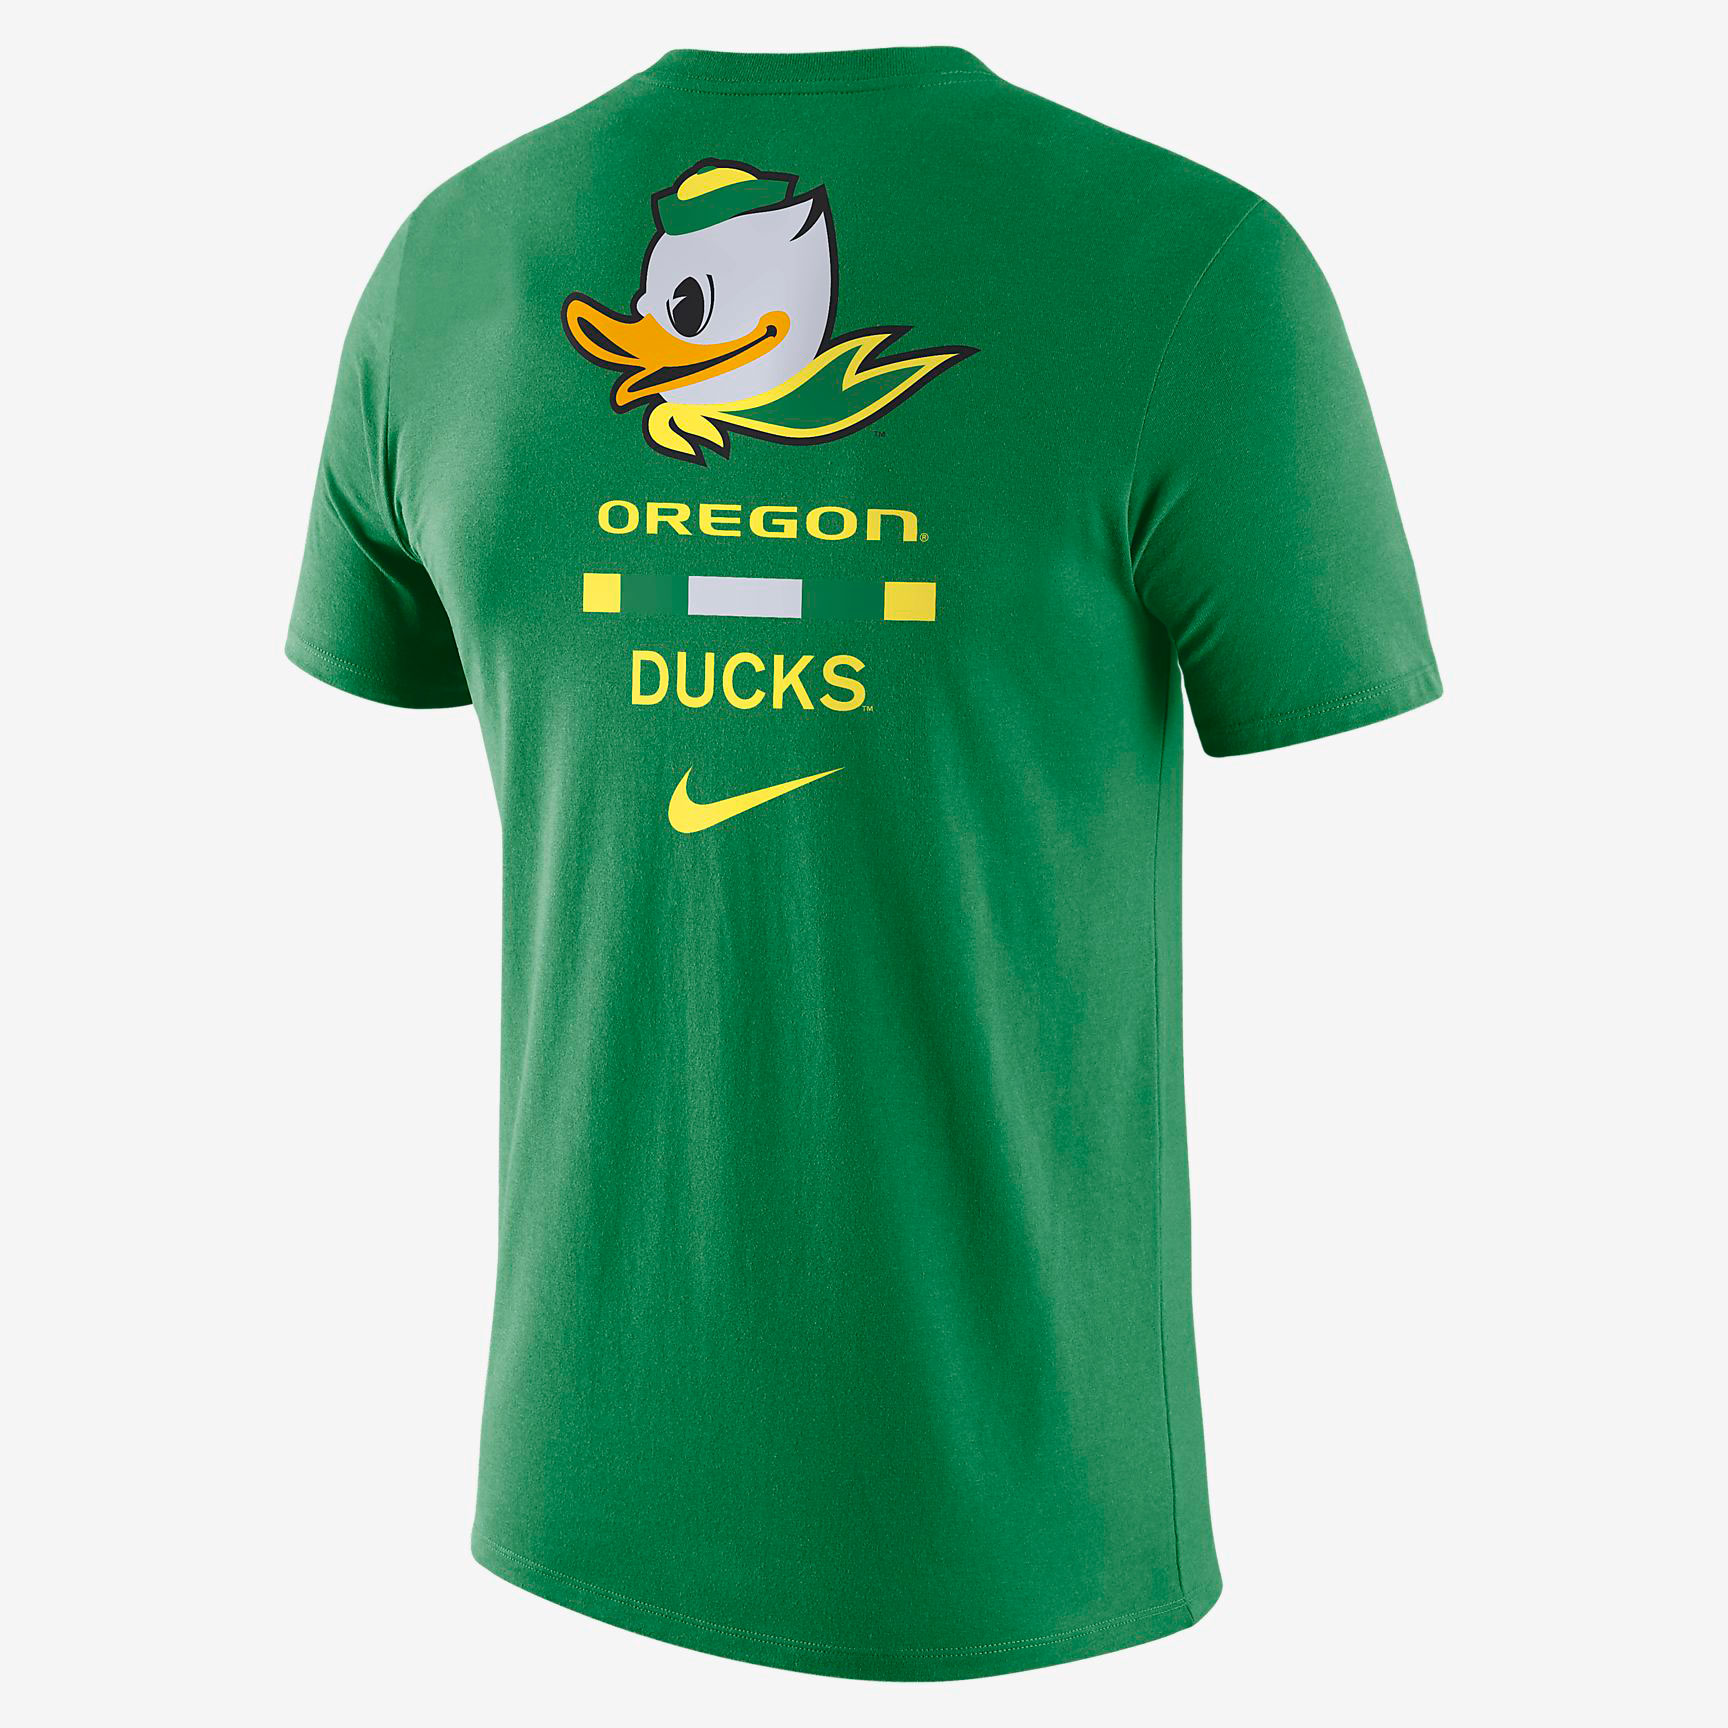 Air Jordan 5 Oregon Ducks Shirts to Match | SneakerFits.com